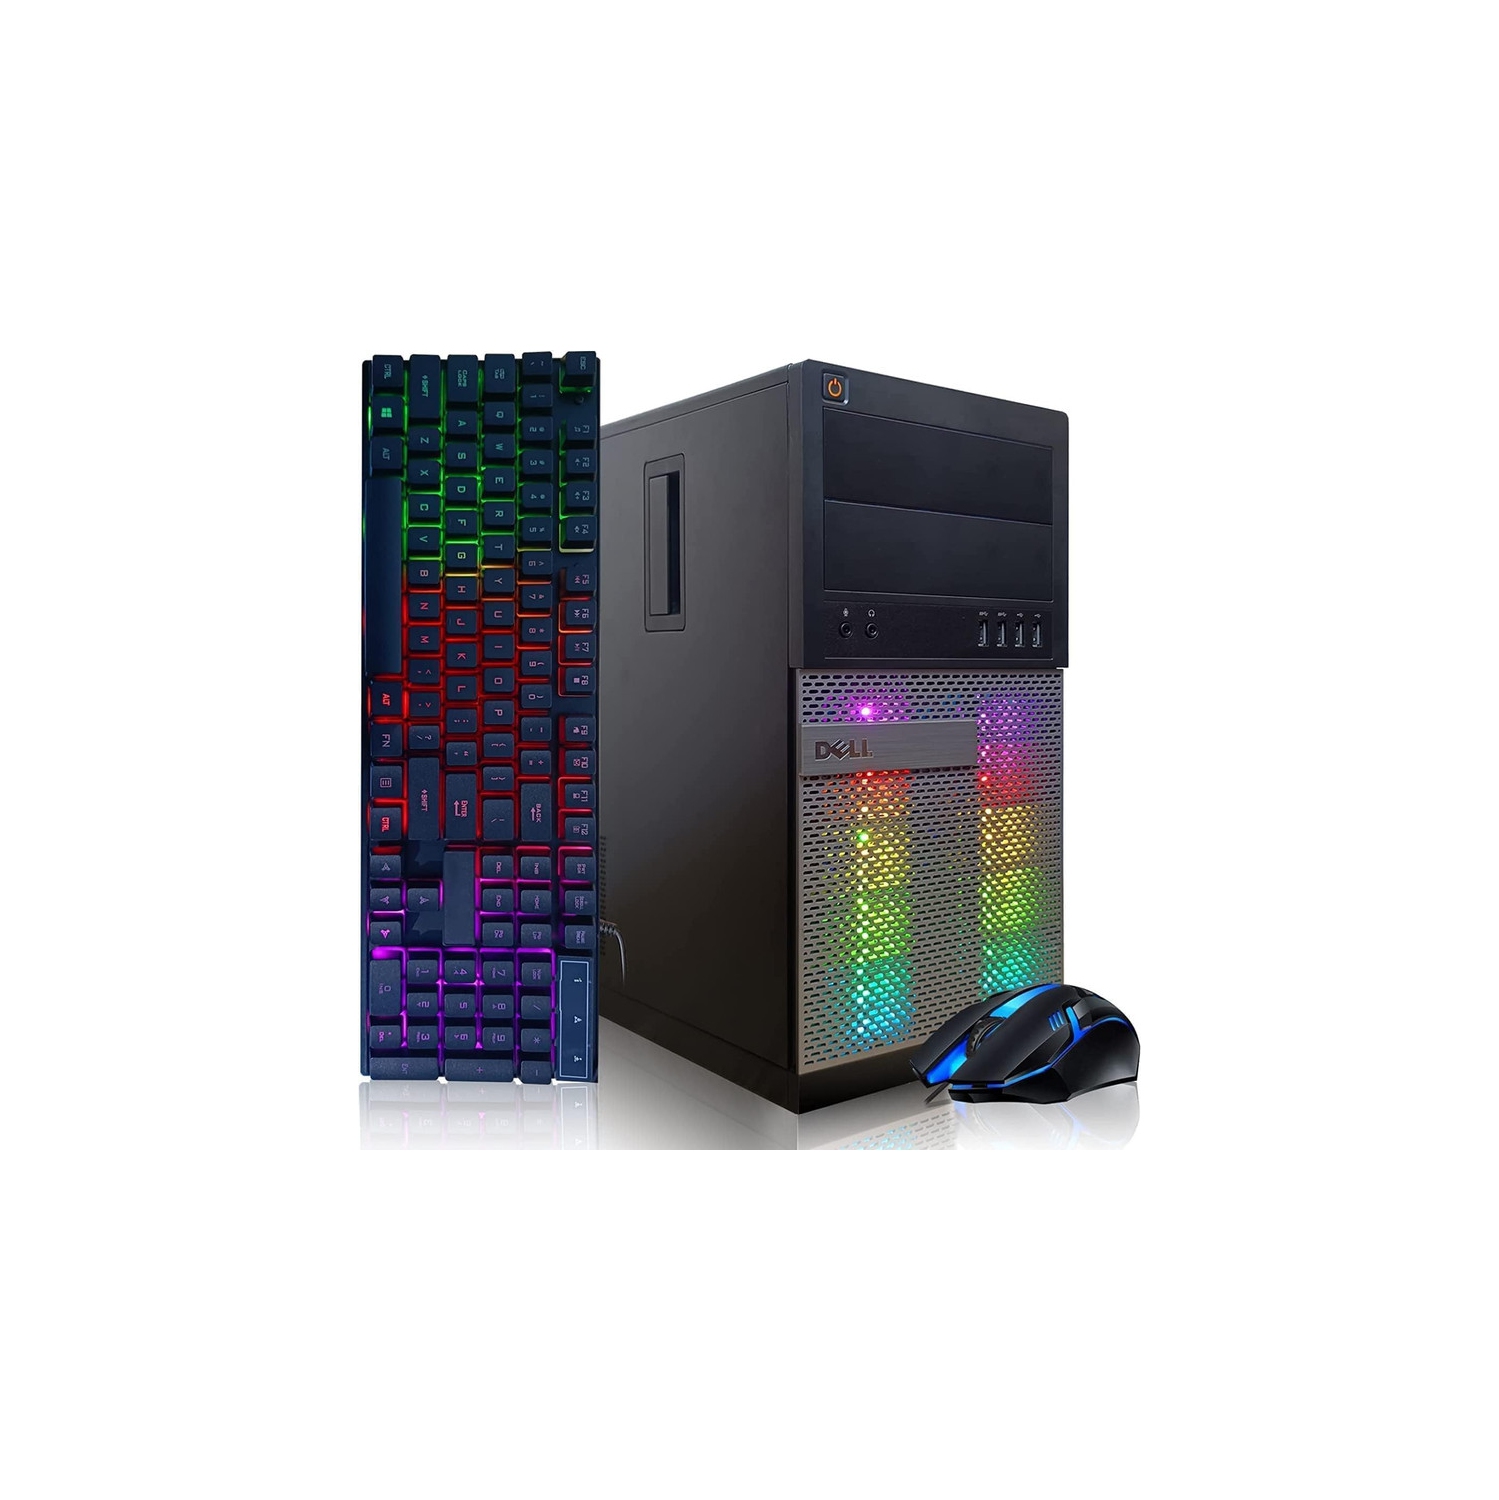 Dell RGB Gaming Desktop Computer, Intel Quad Core I7 up to 3.9GHz, Radeon R9 370 4G, 32GB Memory, 1T SSD, RGB Keyboard & Mouse, 600M WiFi & Bluetooth, Win 10 Pro -Refurbished